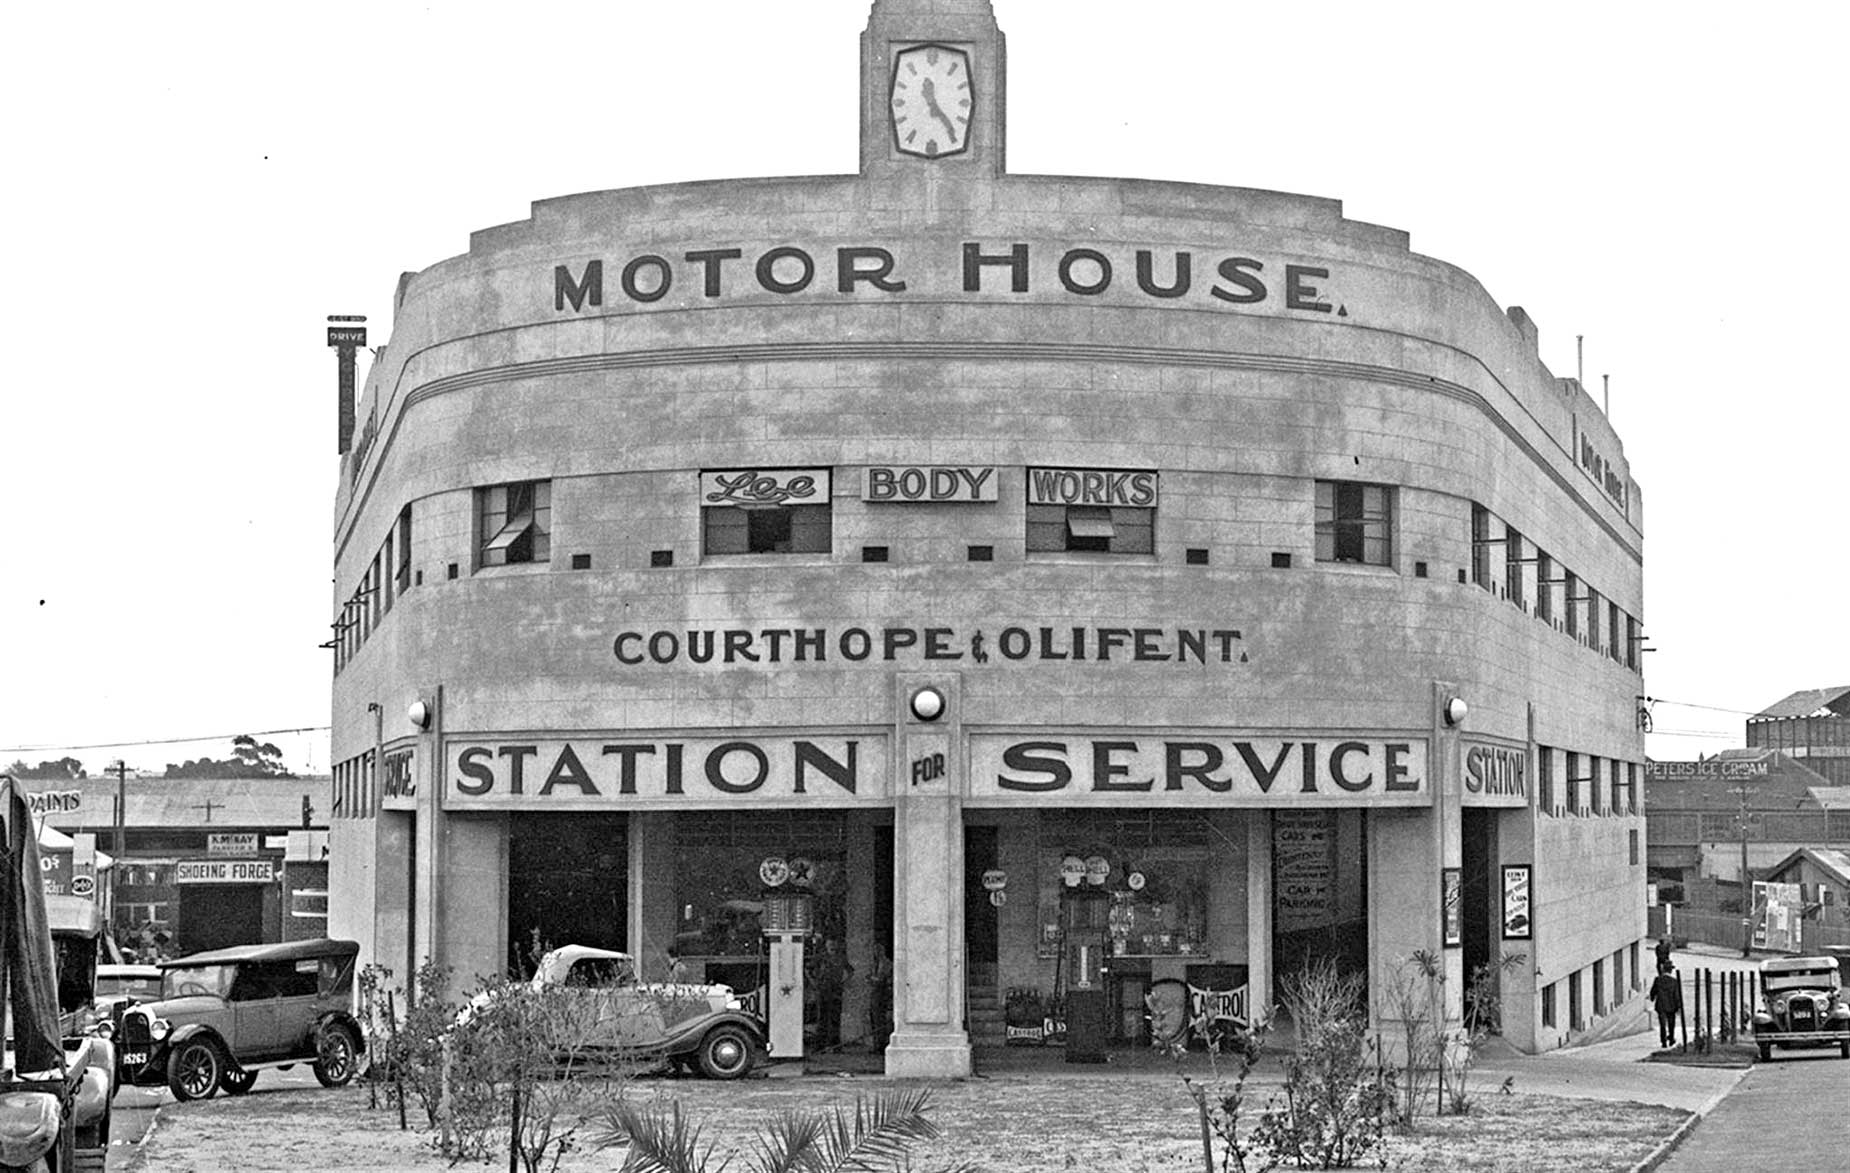 Motor-House-Gas-Station-for-Service-Perth-AZ.jpg